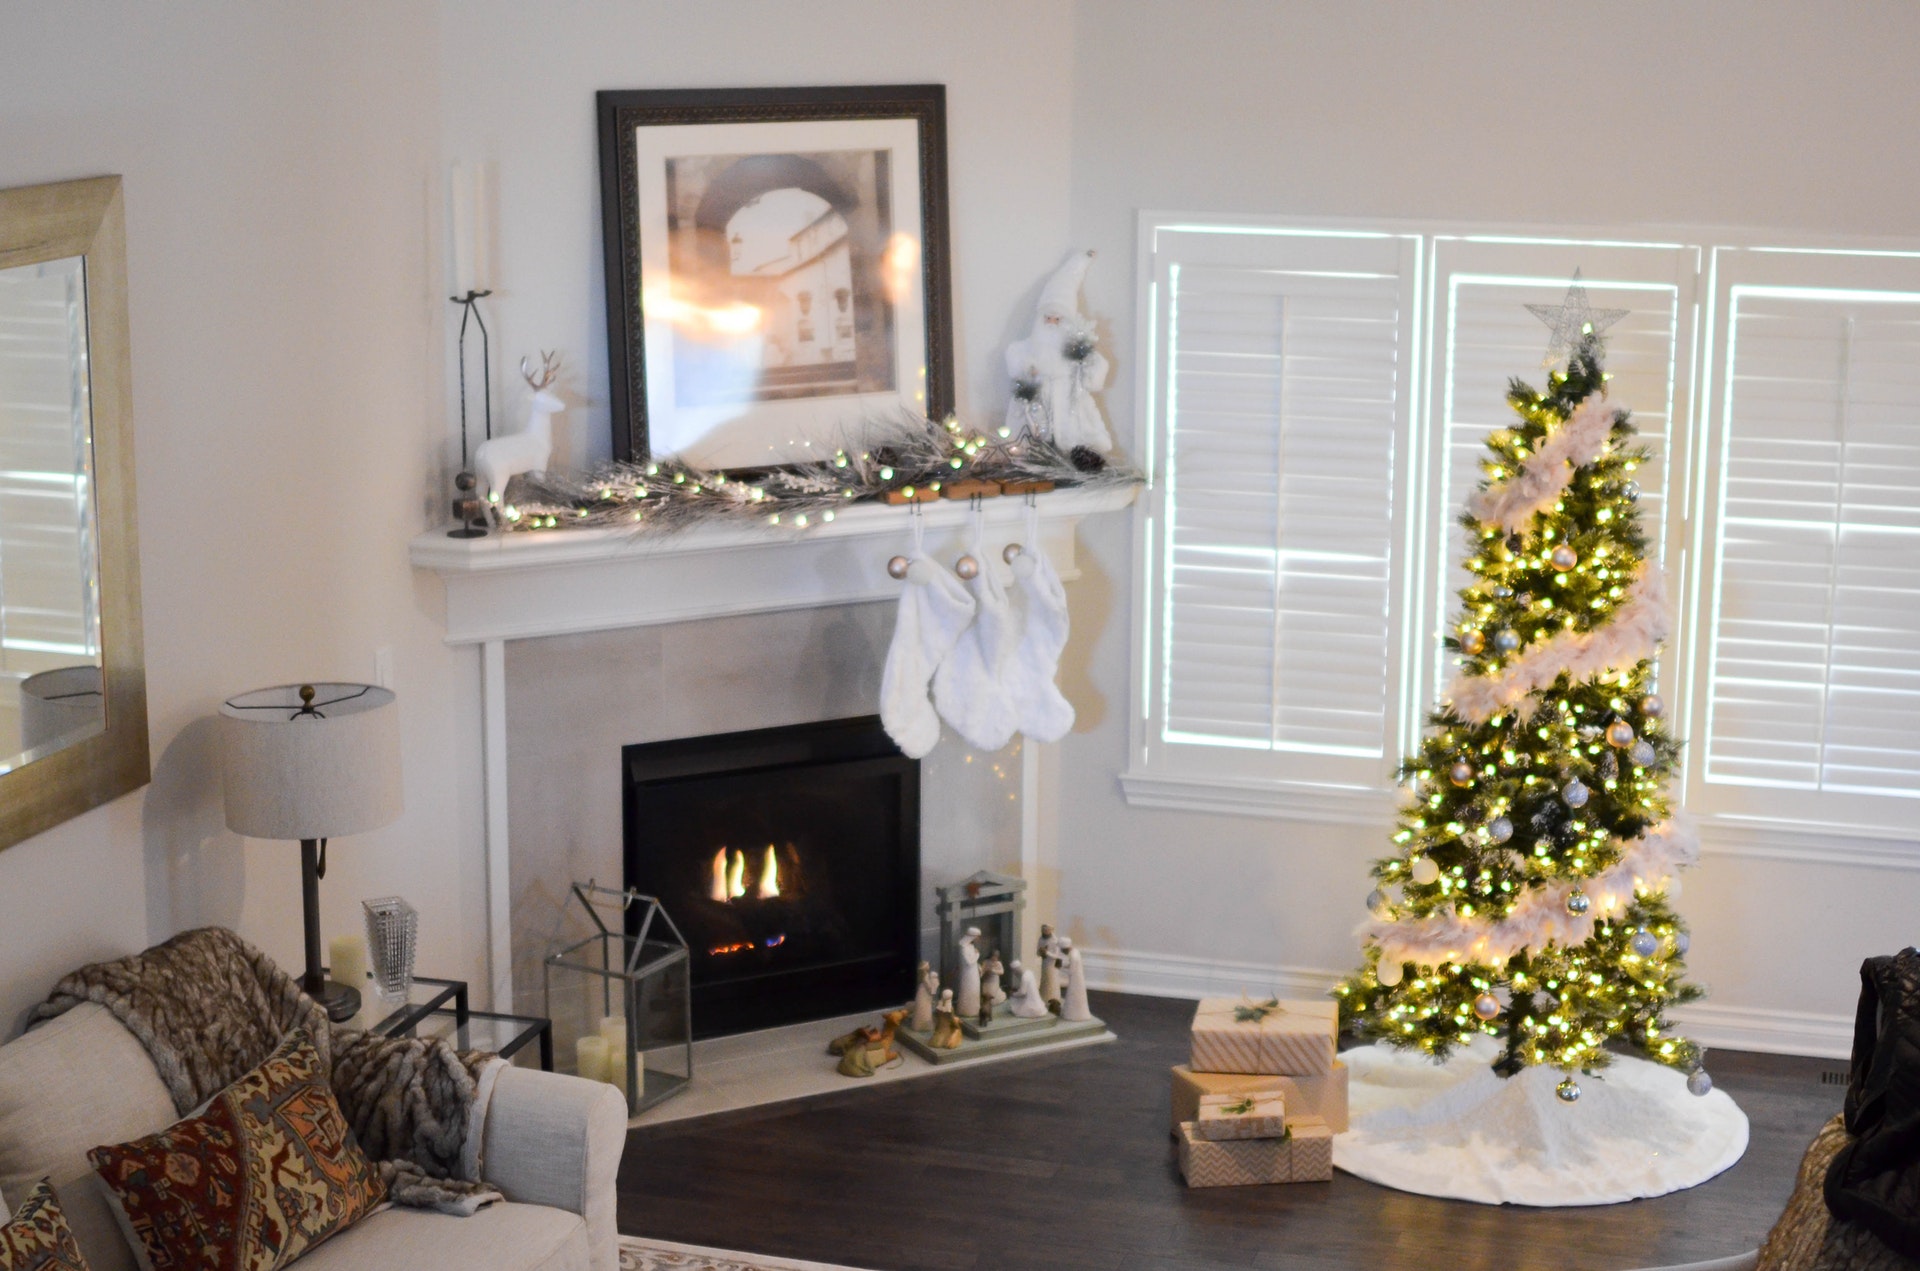 rendere festosa una casa minimalista a Natale